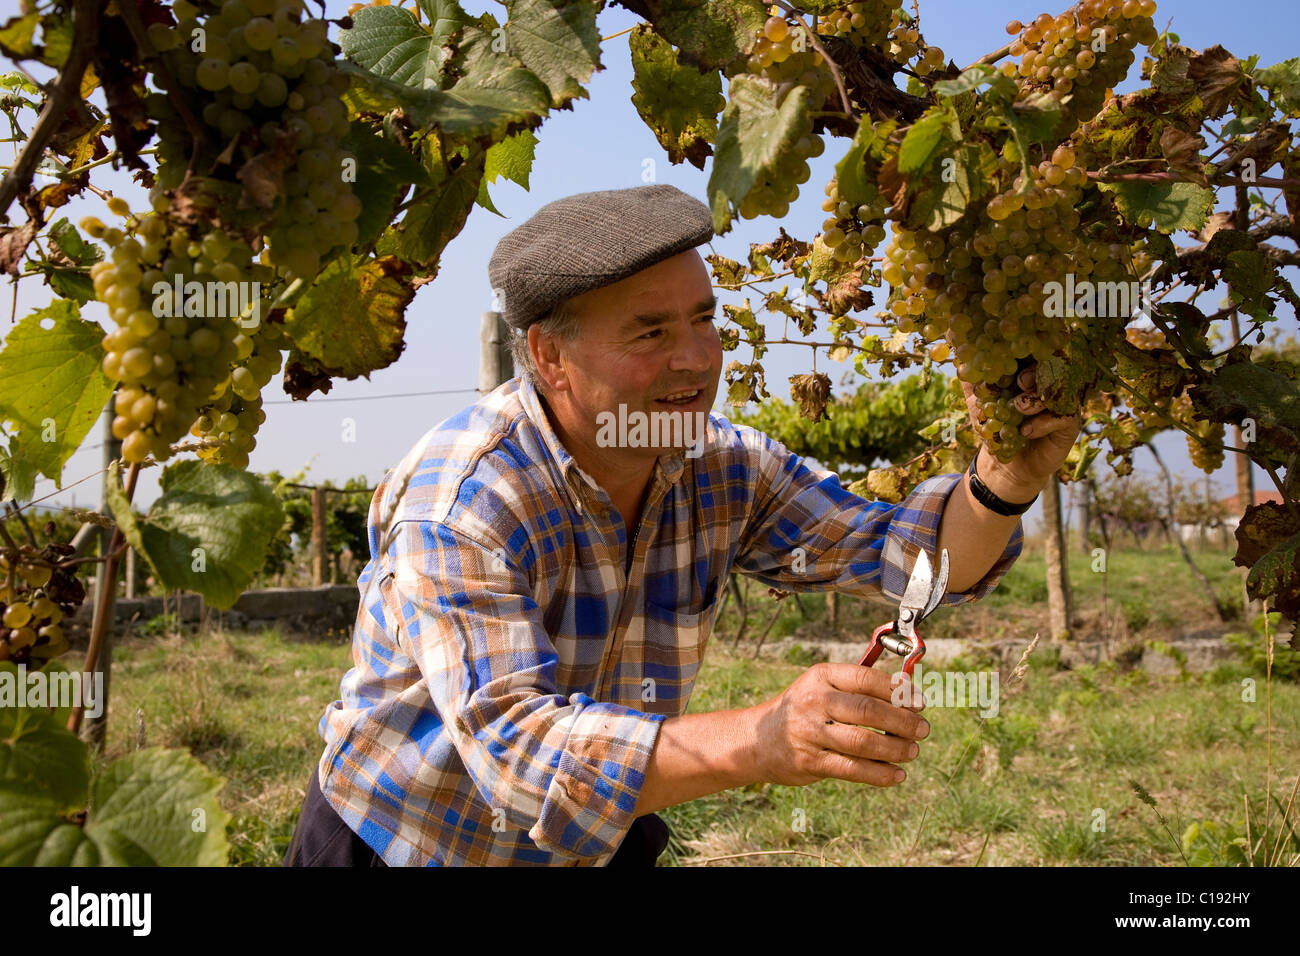 Man harvesting grapes on the Pazo d'Anha, cultivation of Trajadura grapes for Anselmo Mendes' Vinho Verde wine, Minho area Stock Photo